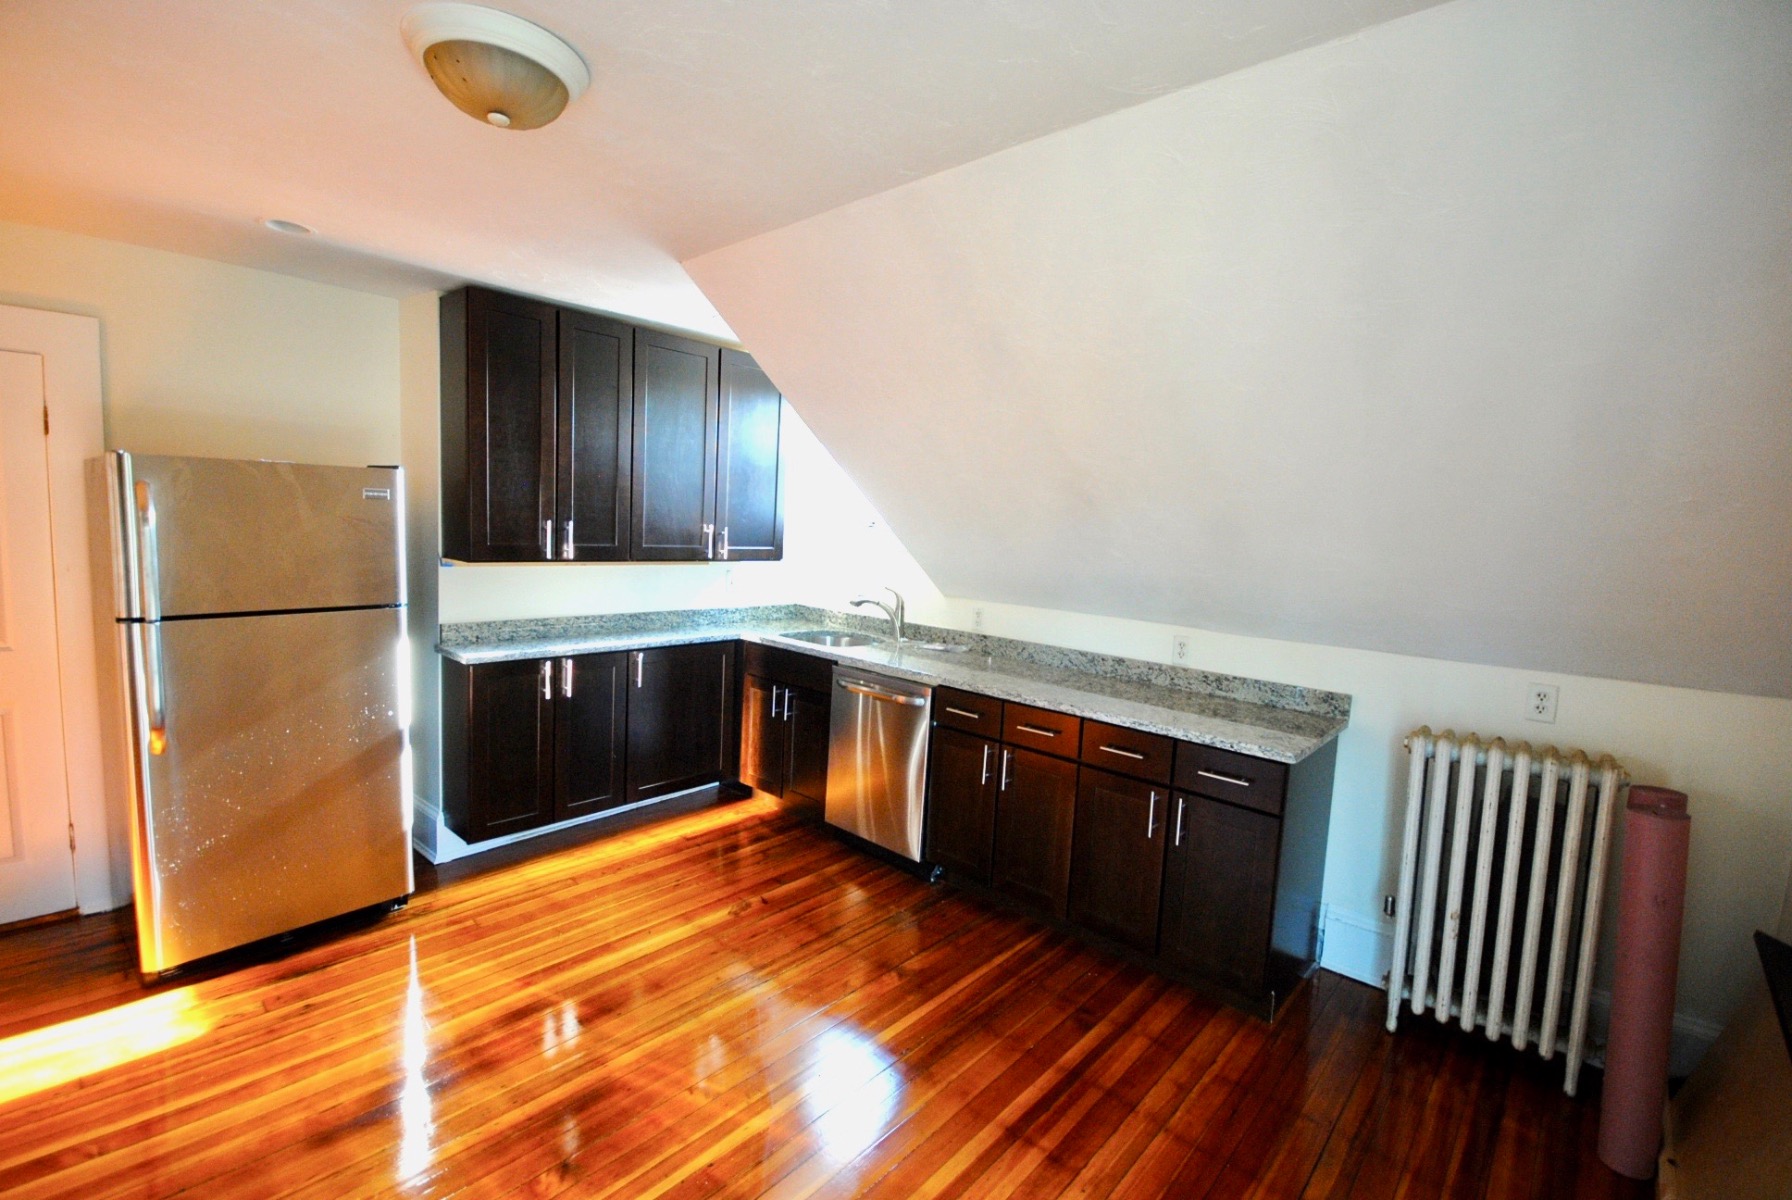 Photos of apartment on Corwin St.,Boston MA 02122